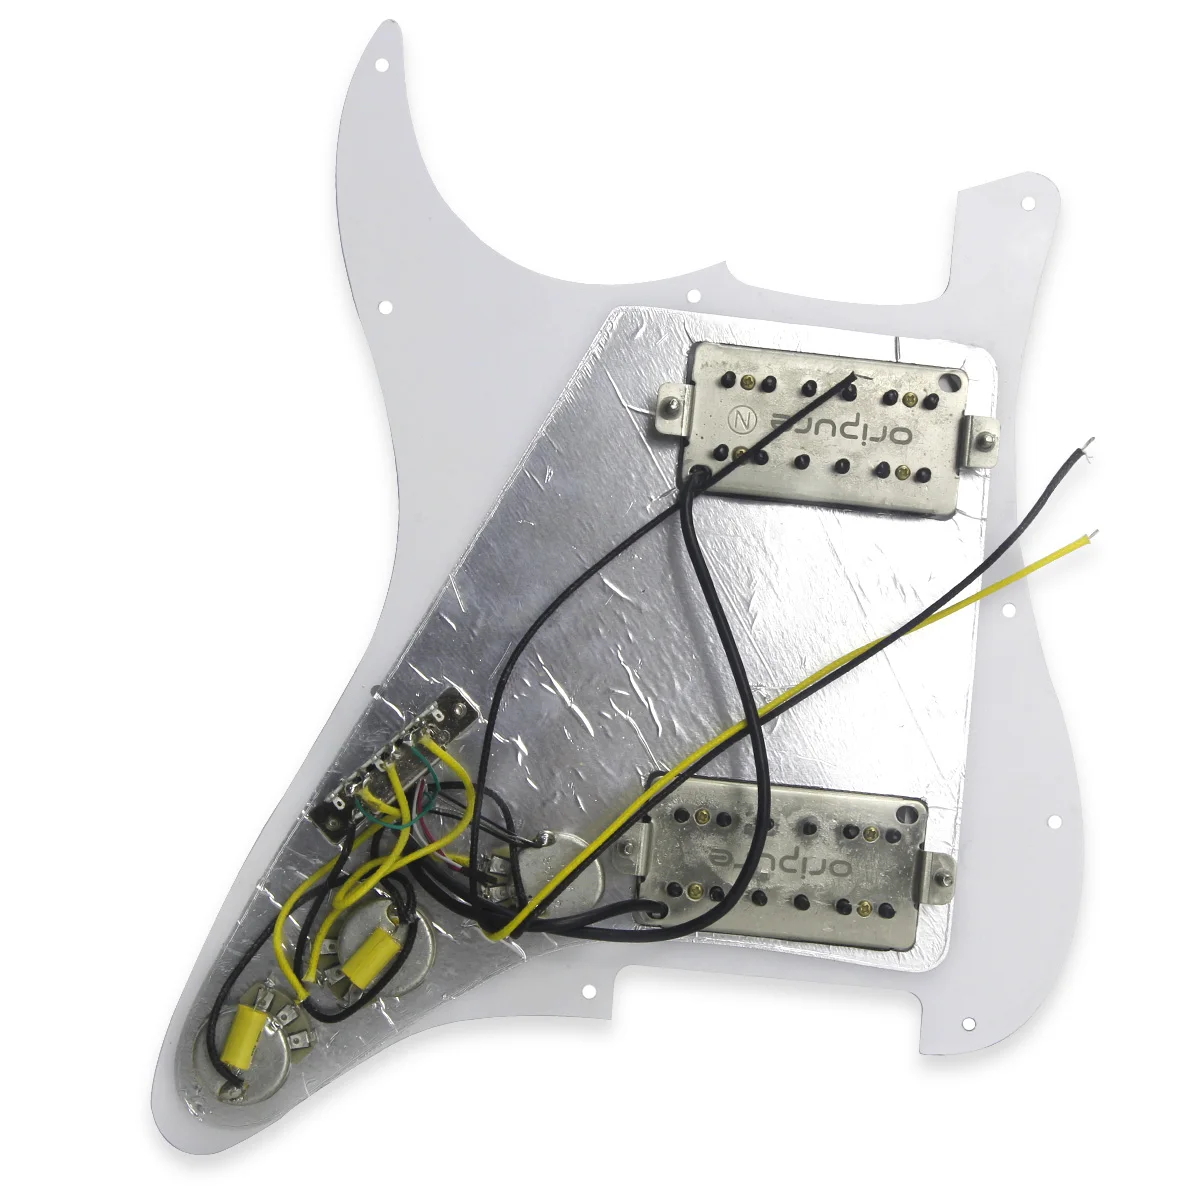 OriPure HH загруженный Pickguard Prewired хамбакер Пикап Alnico 5 набор в сборе белый жемчуг гитары запчасти